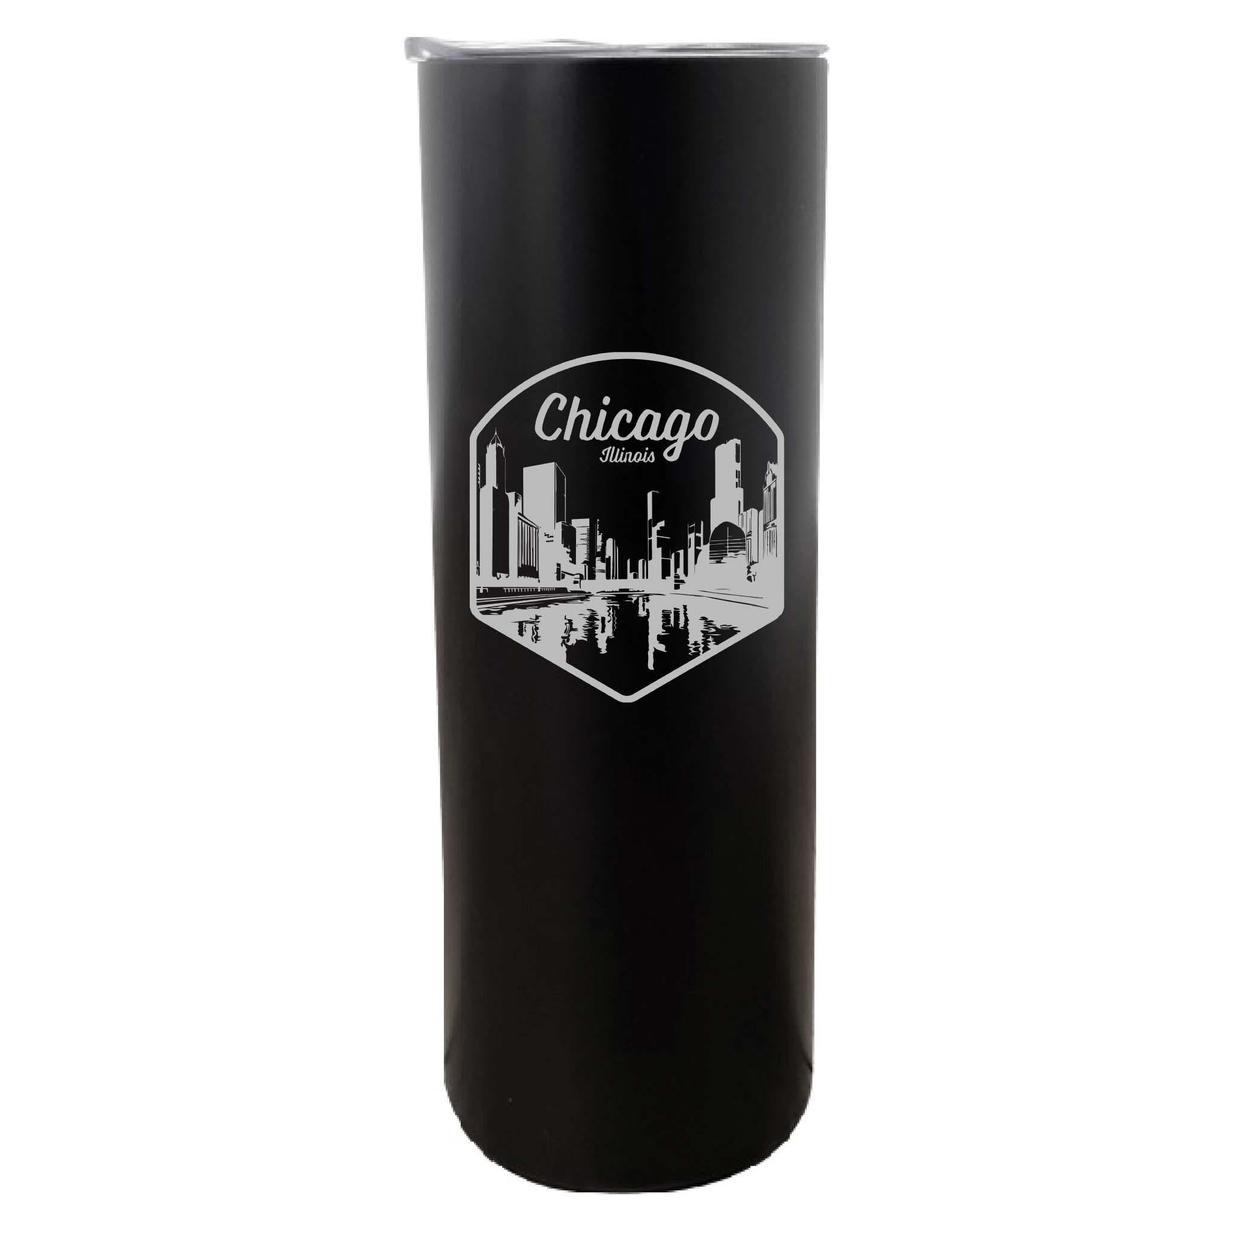 Chicago Illinois Souvenir 20 Oz Engraved Insulated Skinny Tumbler - Black,,2-Pack